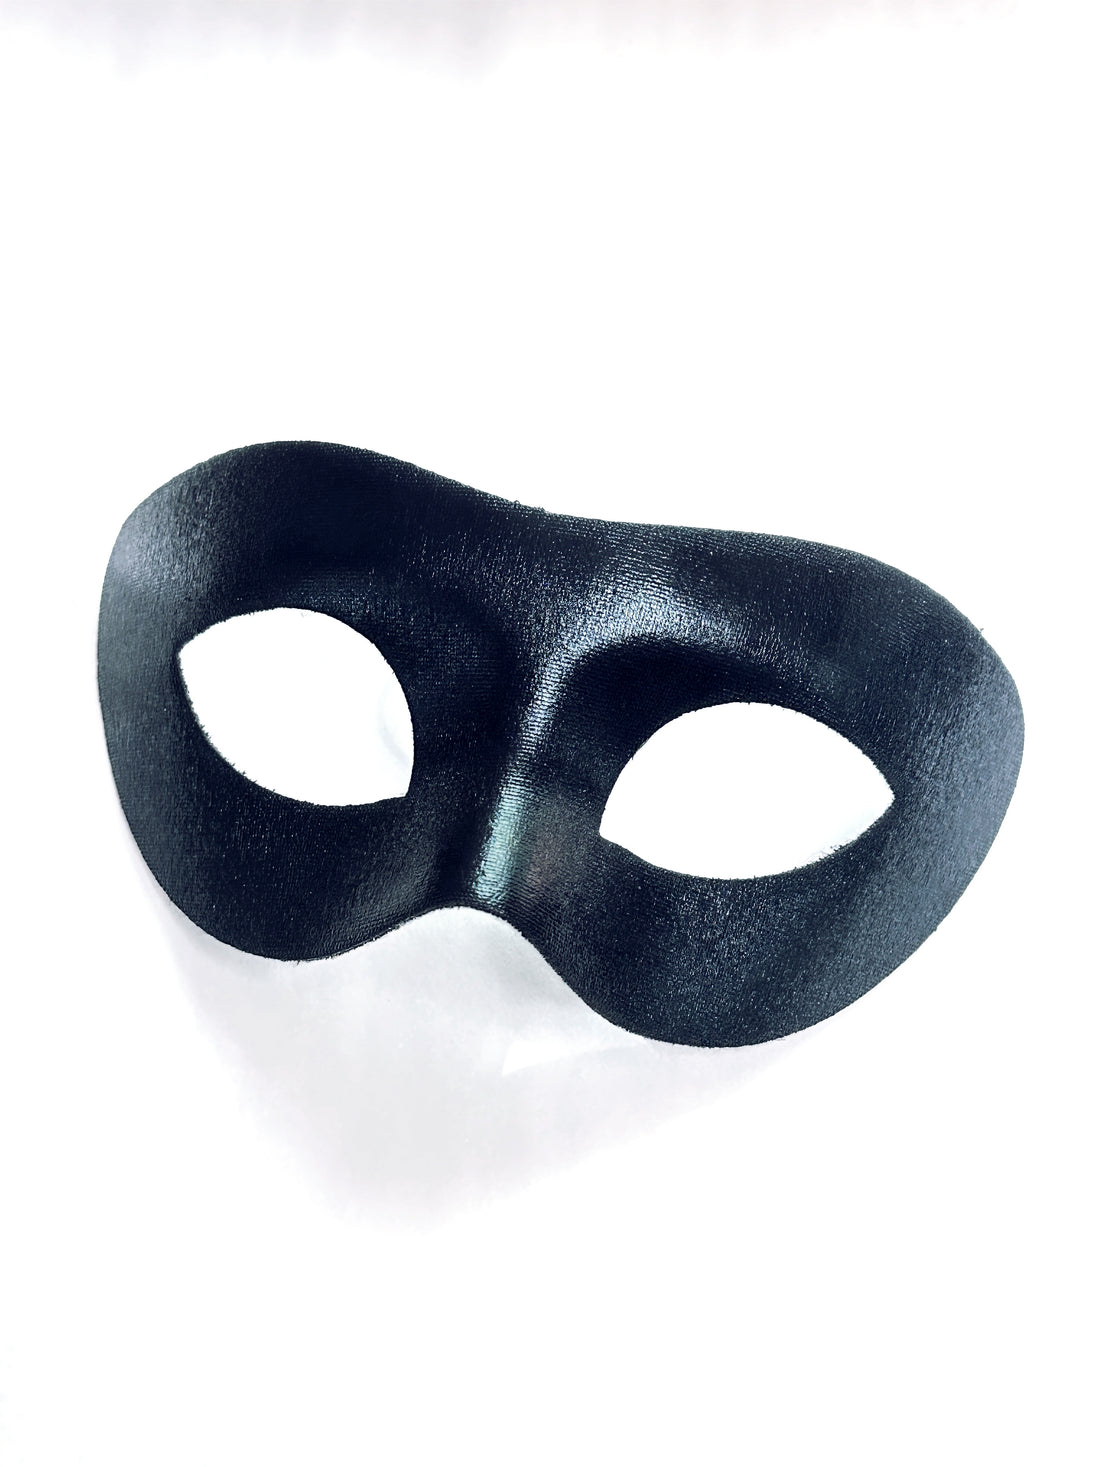 Bulk masquerade masks in black.